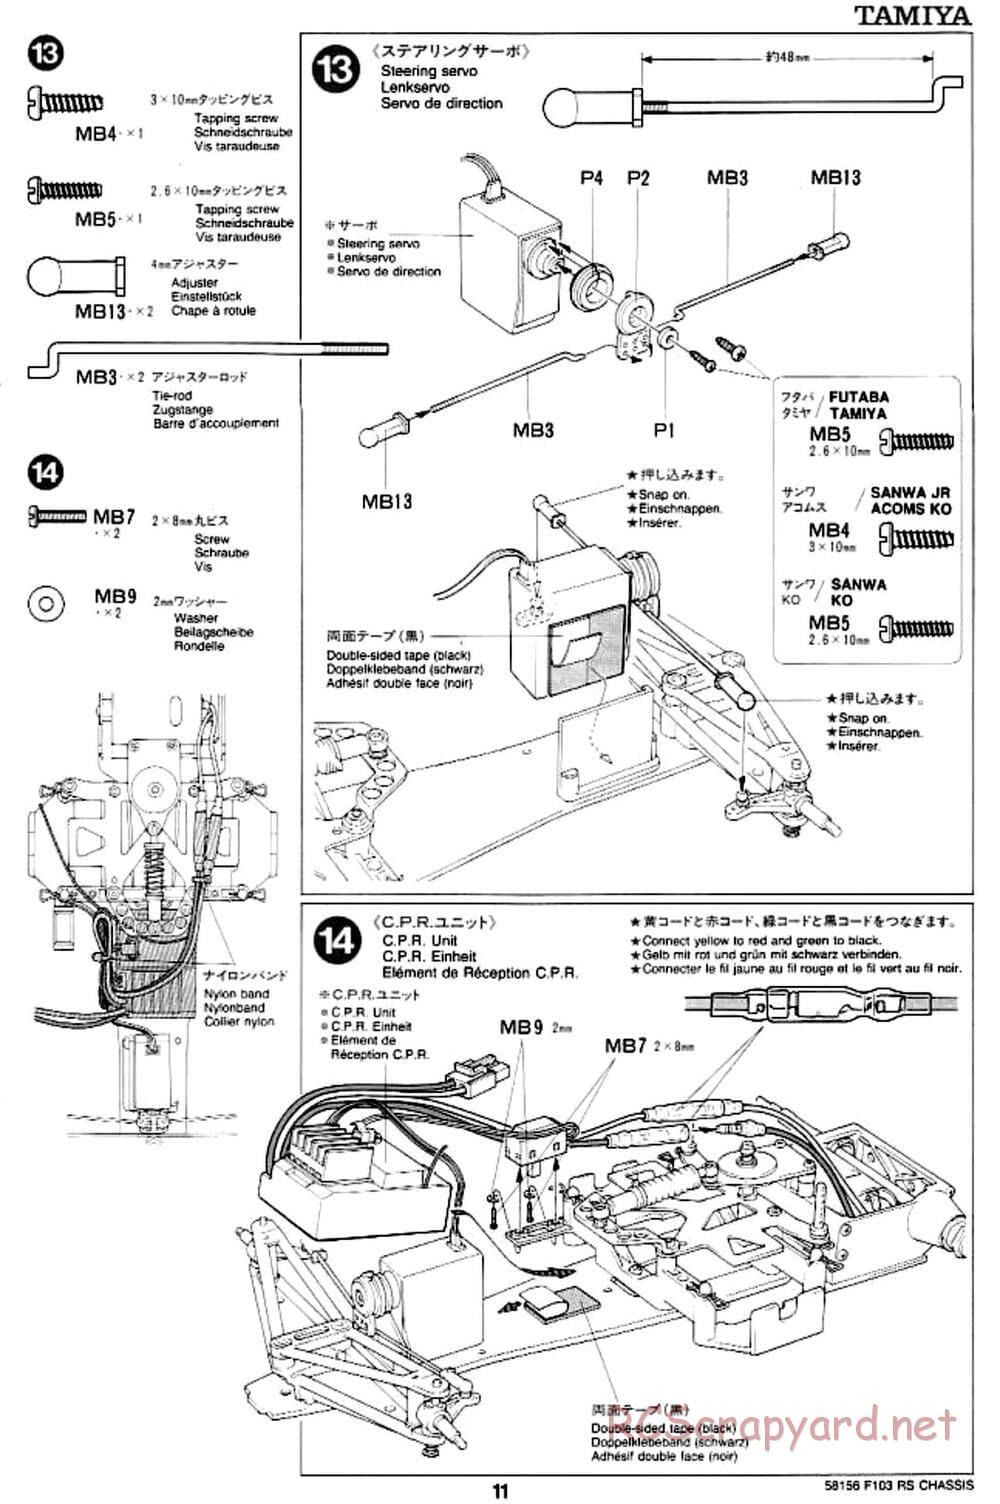 Tamiya - F103RS Chassis - Manual - Page 11